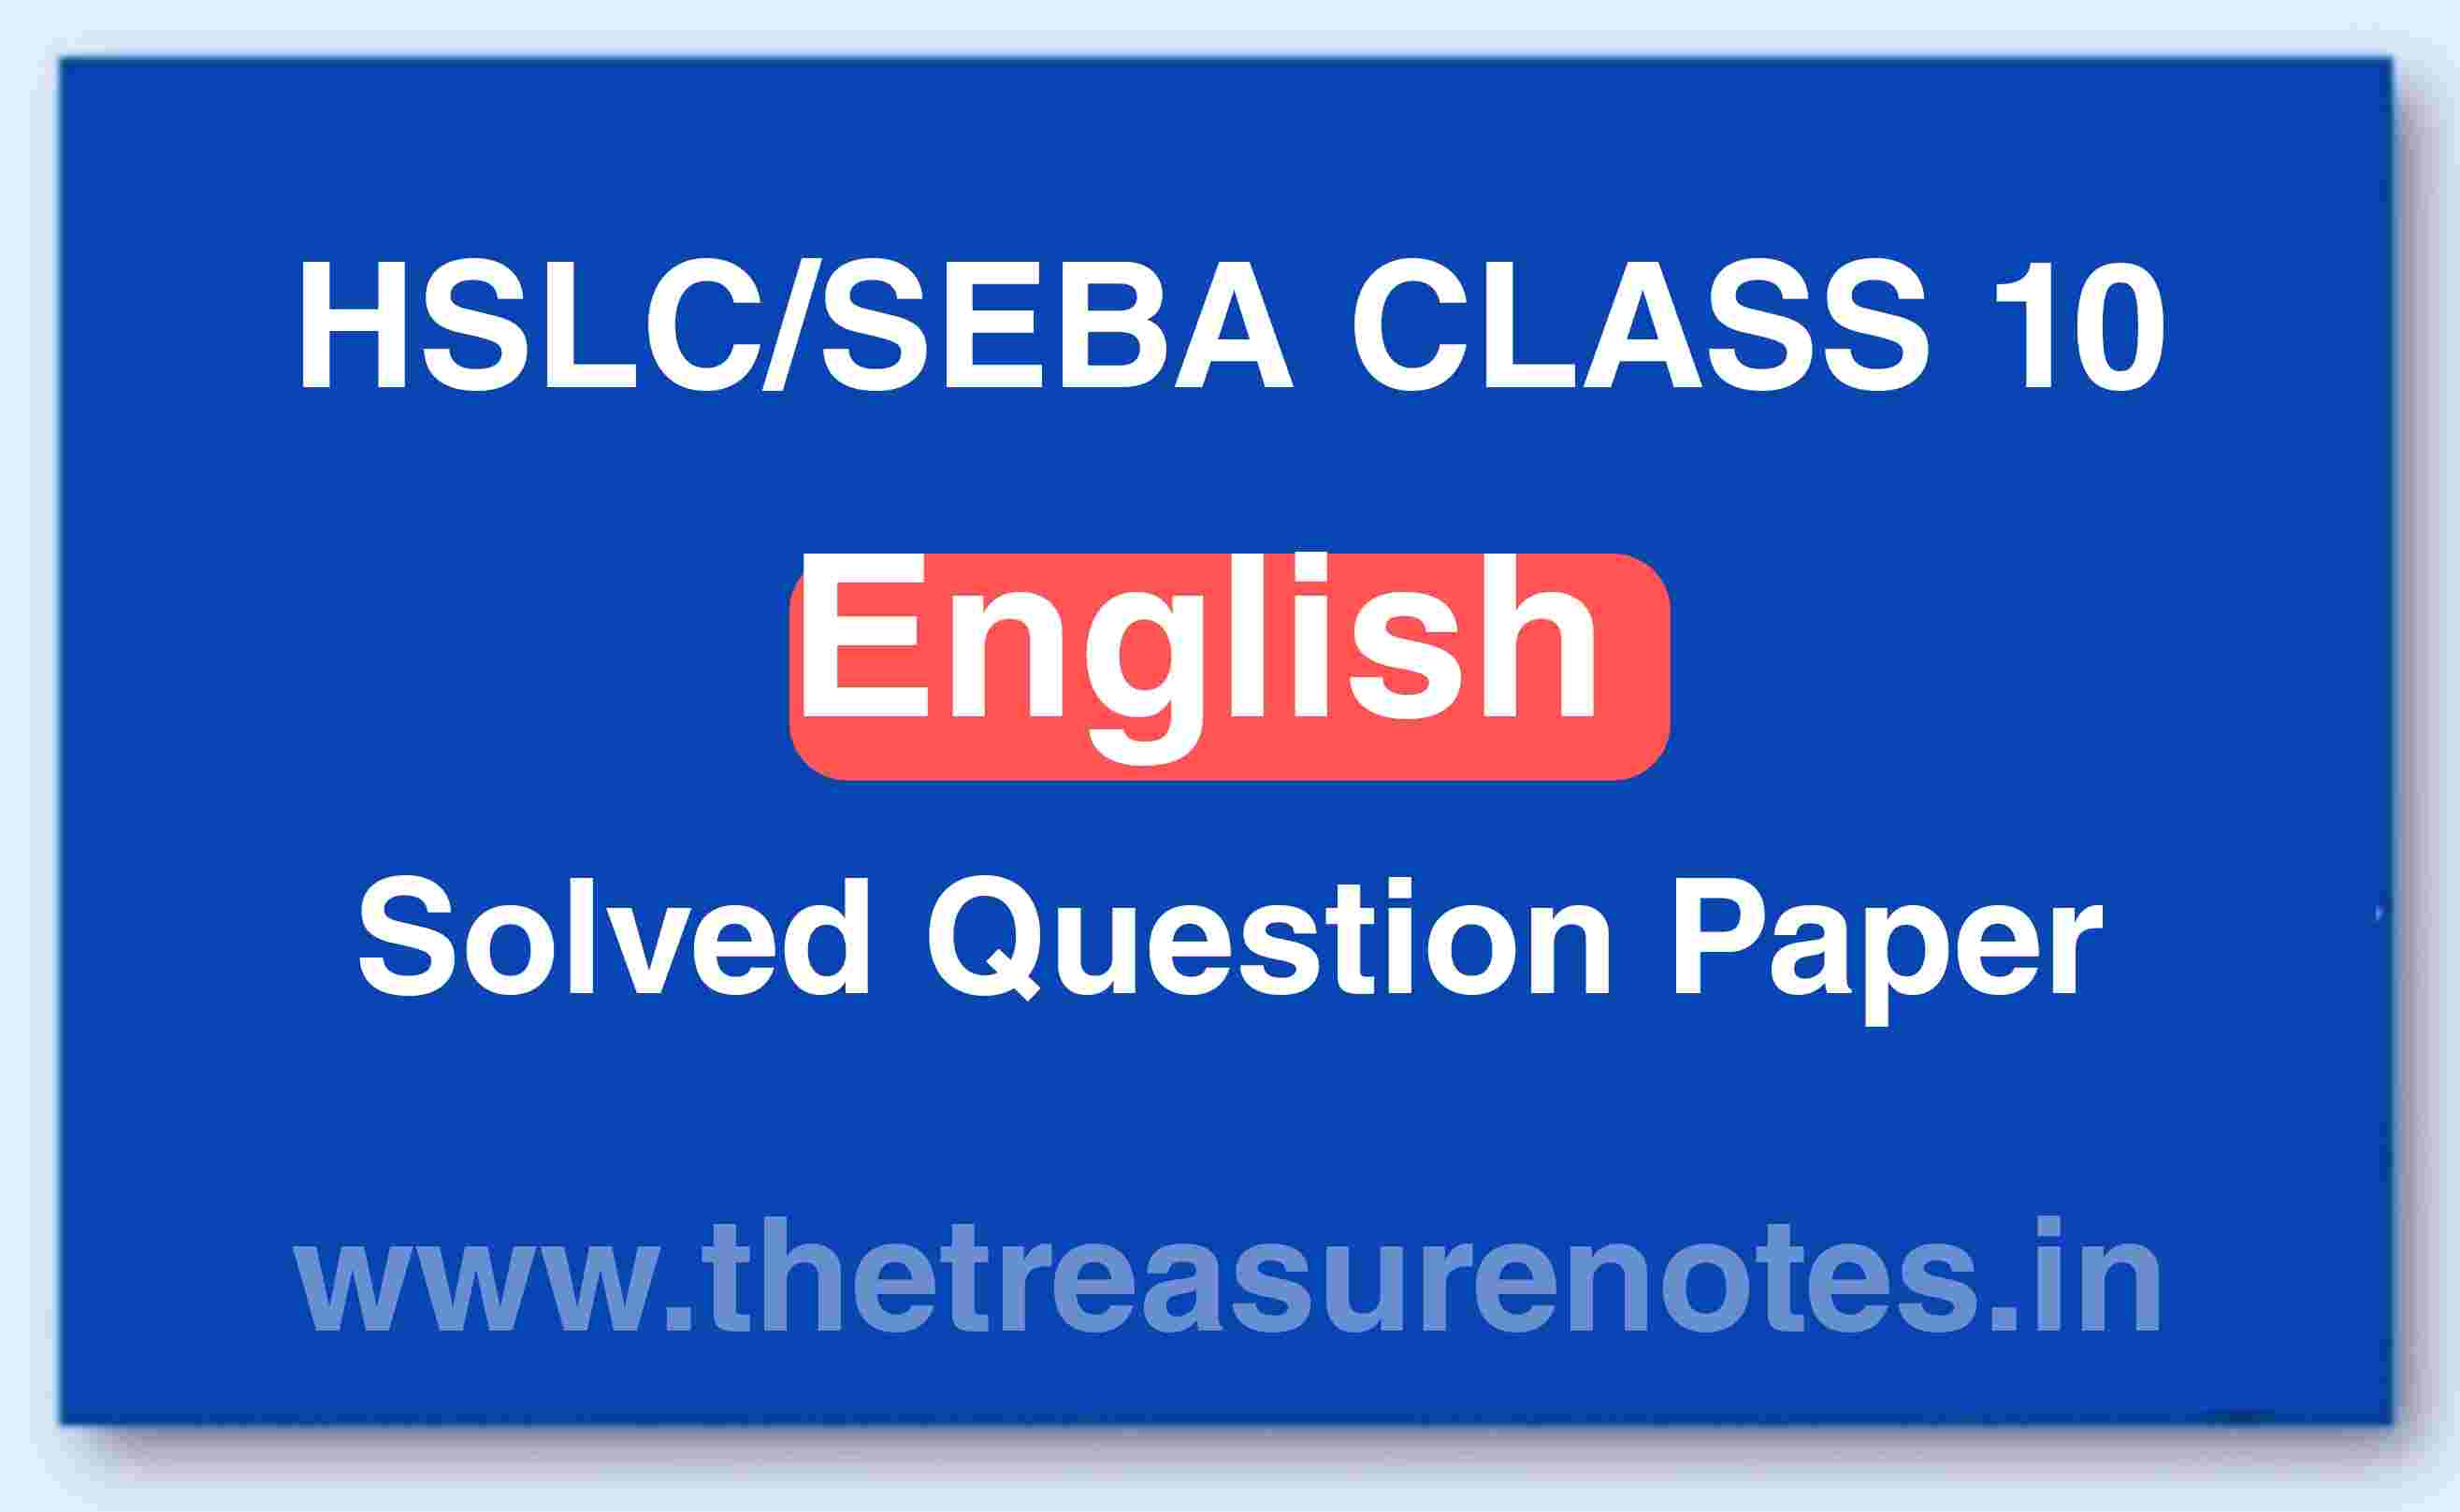 HSLC/SEBA Class 10 English Solved Question Paper 2020